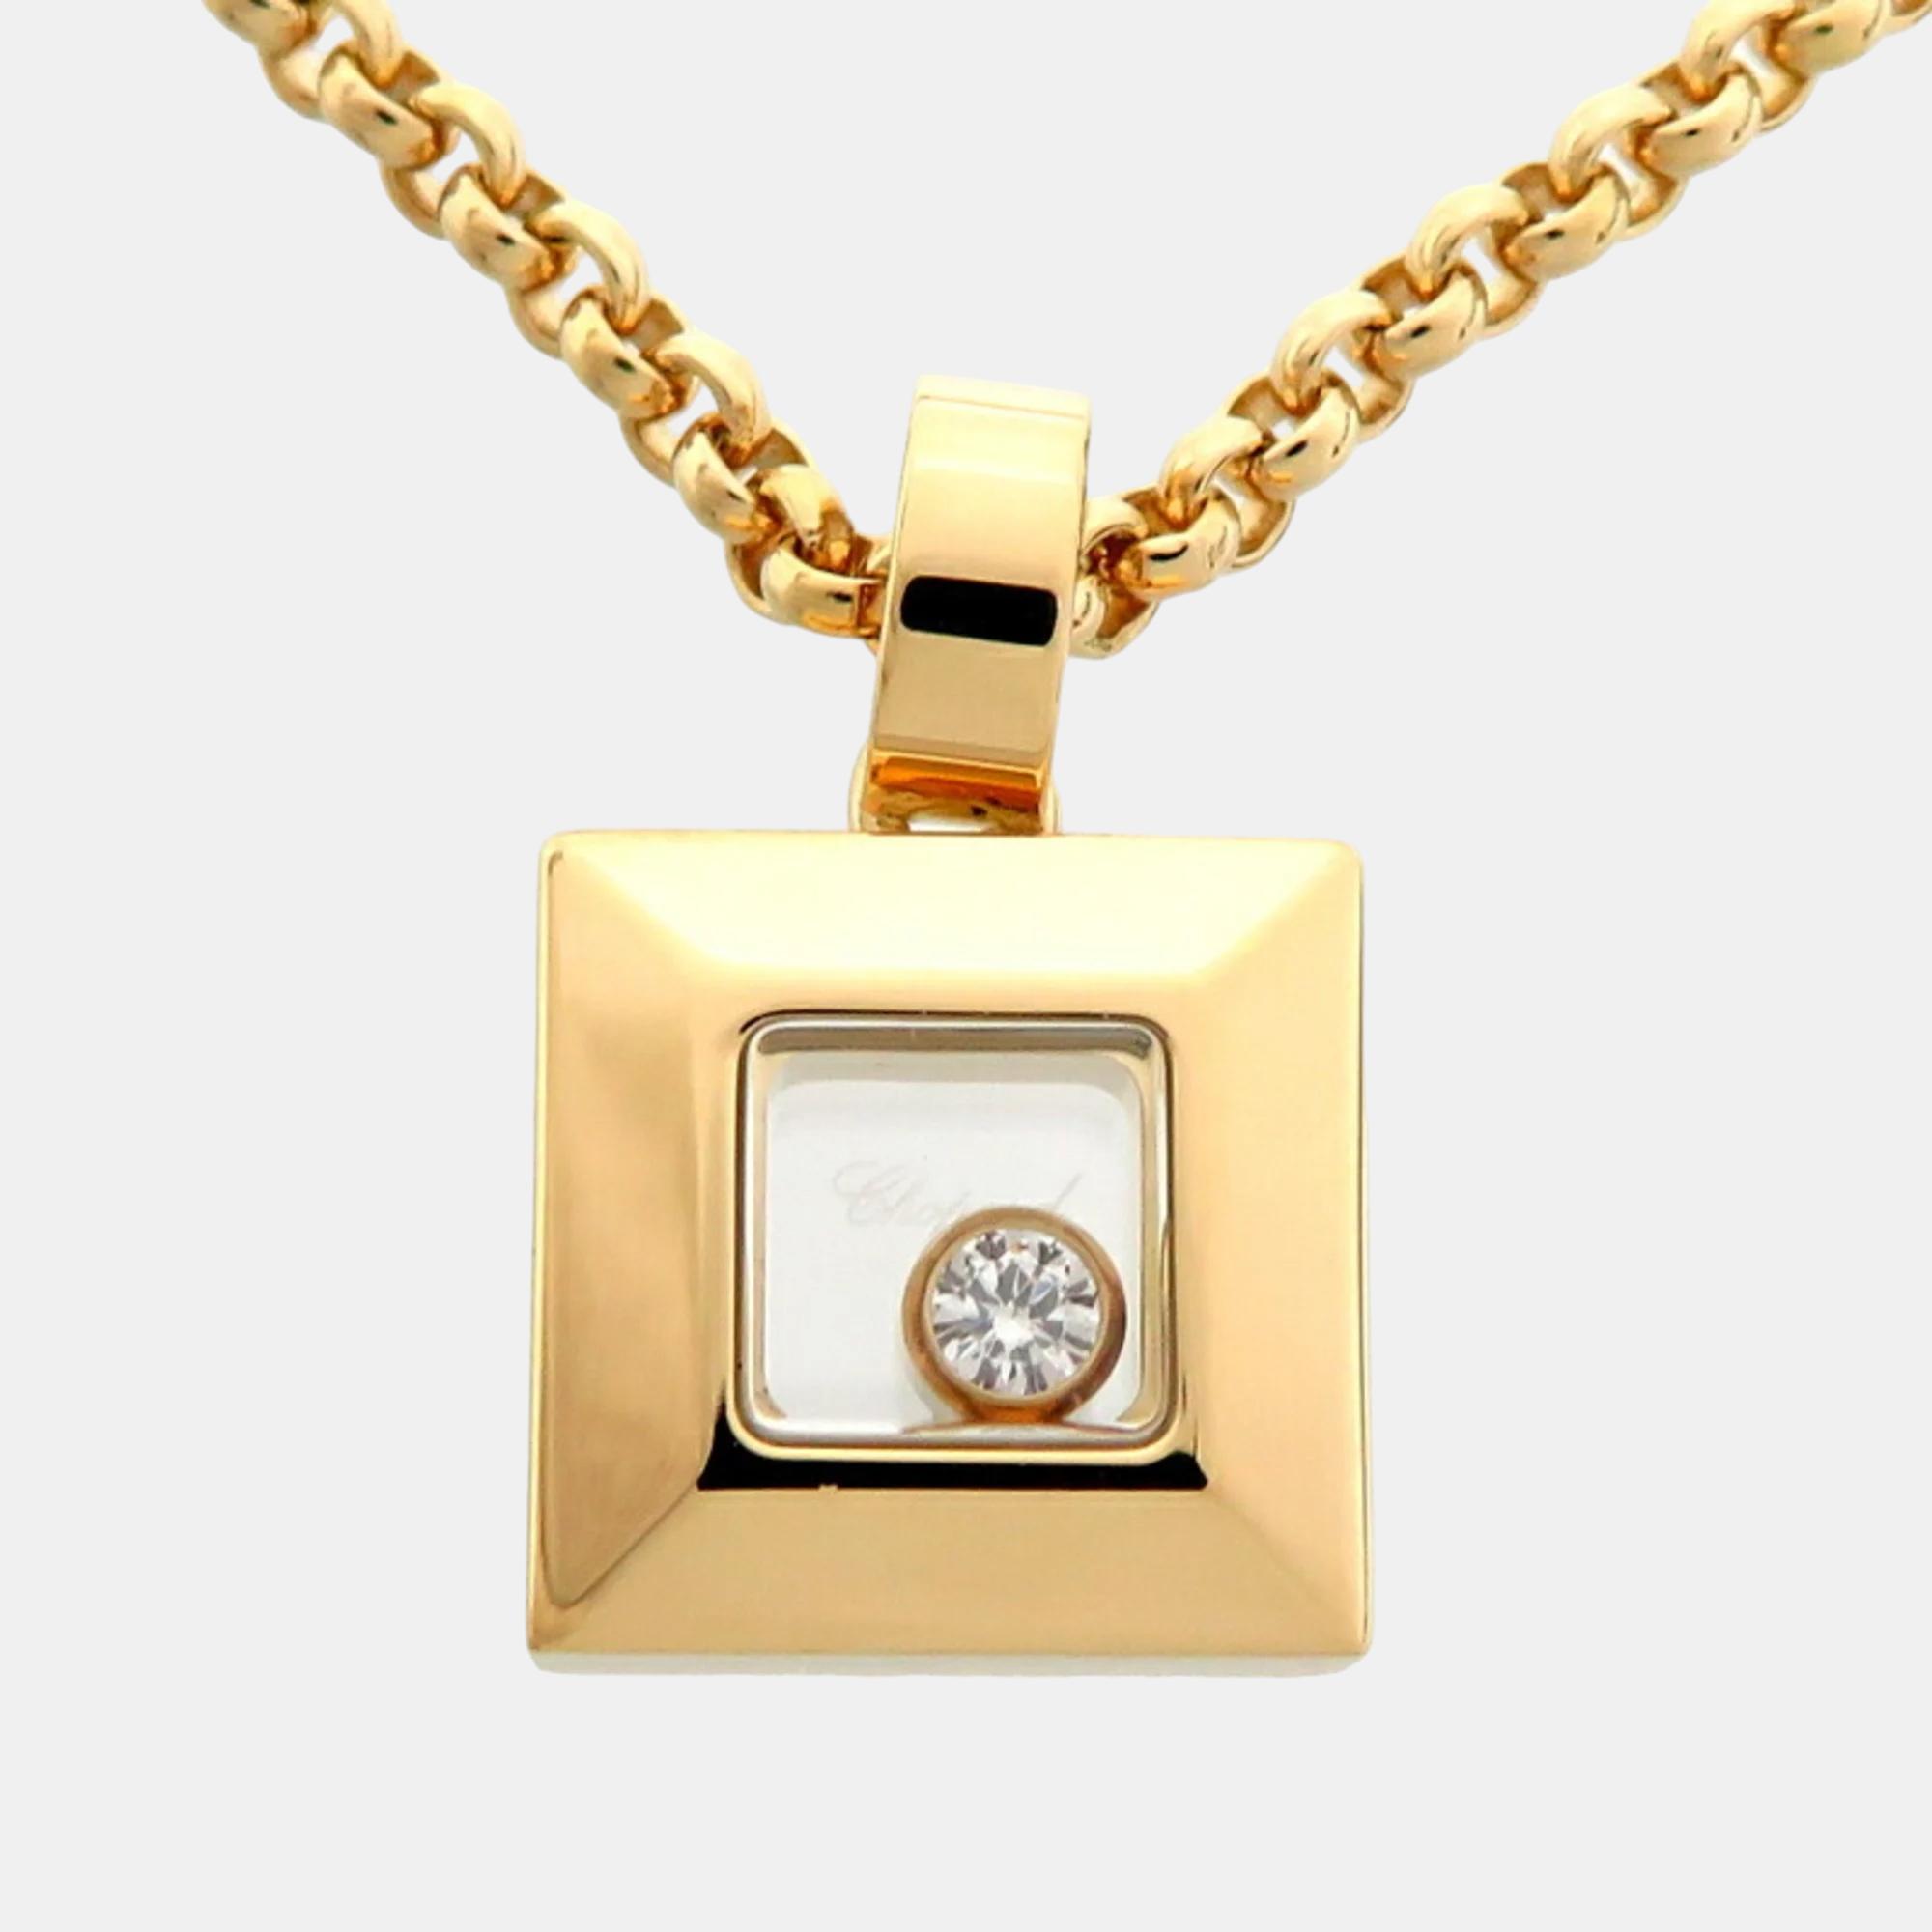 Chopard 18k yellow gold and diamond happy diamonds pendant necklace